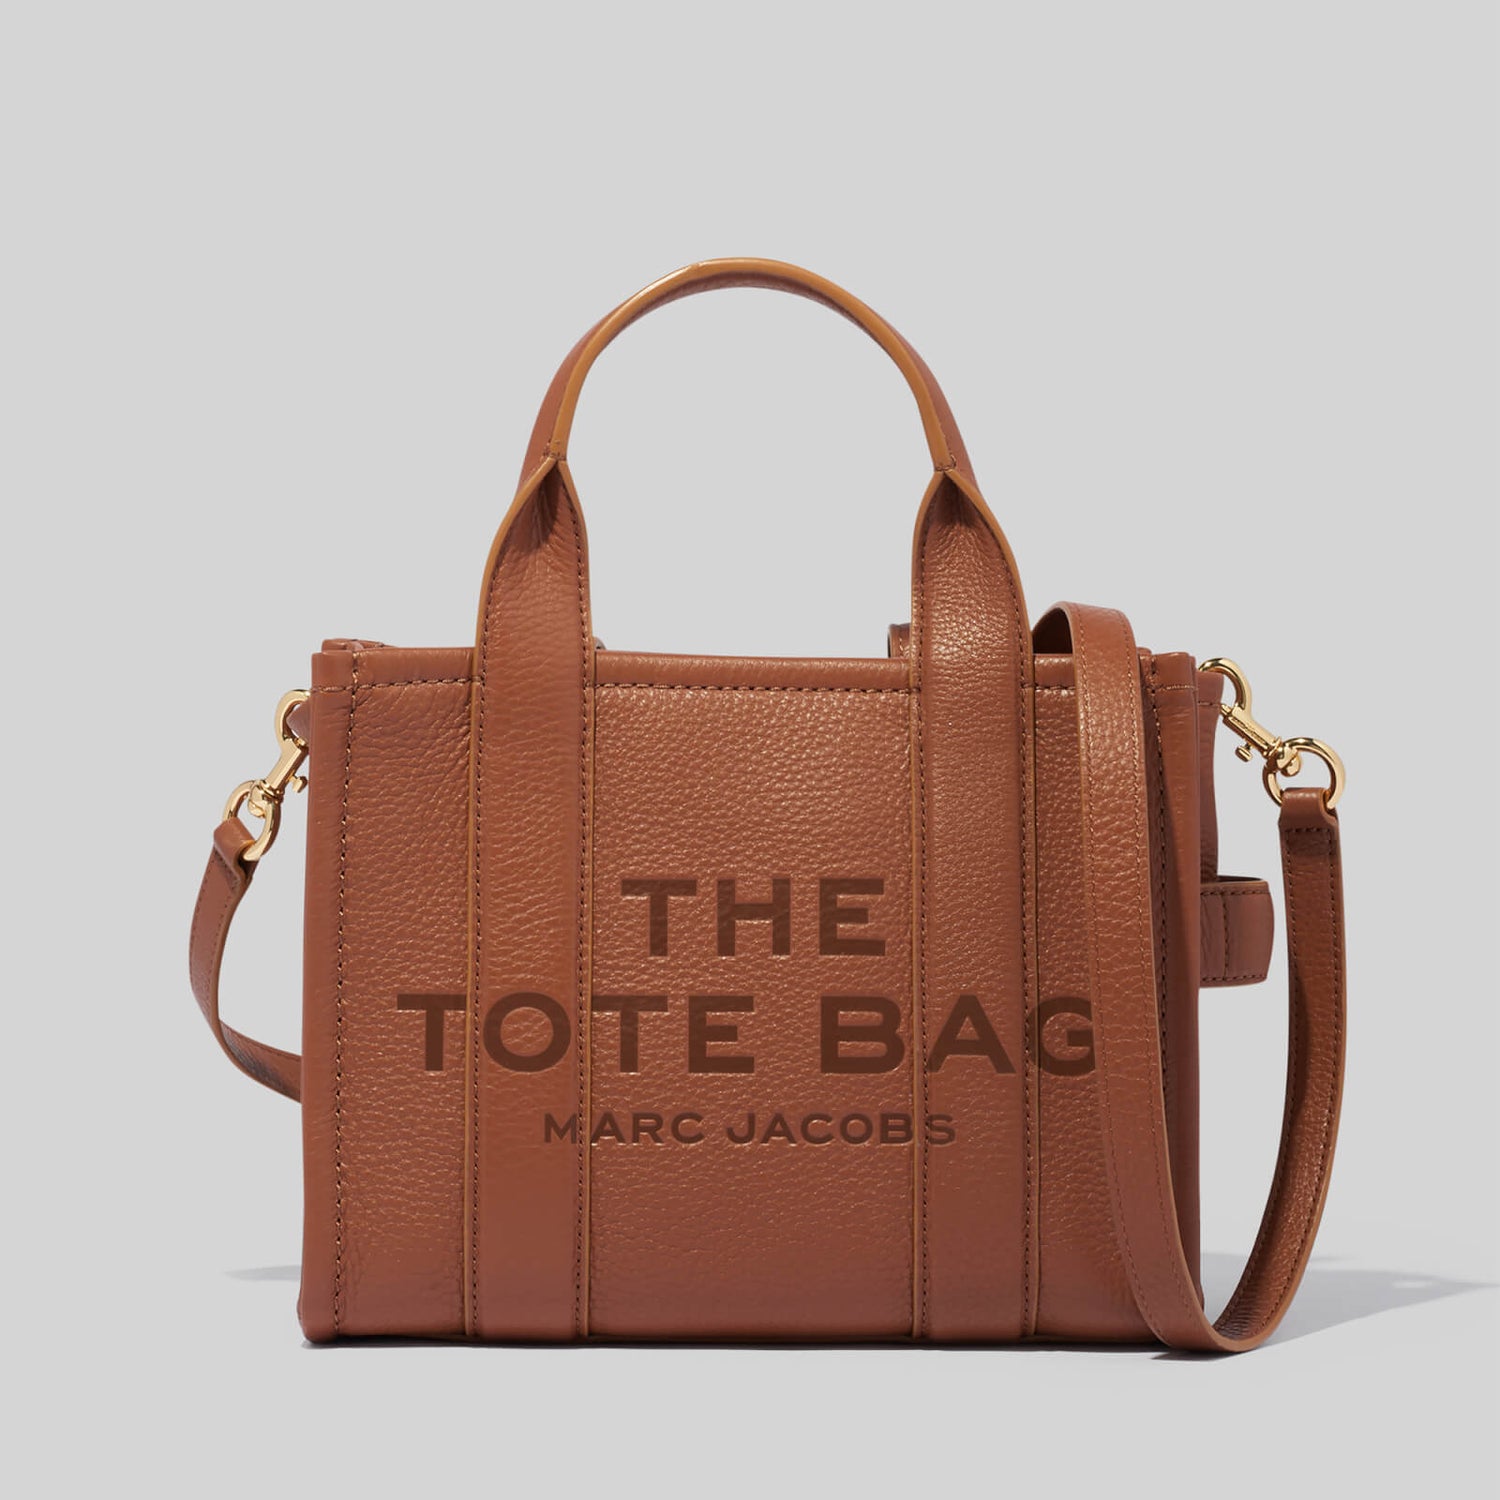 Marc Jacobs Women's The Mini Tote Bag Leather - Argan Oil